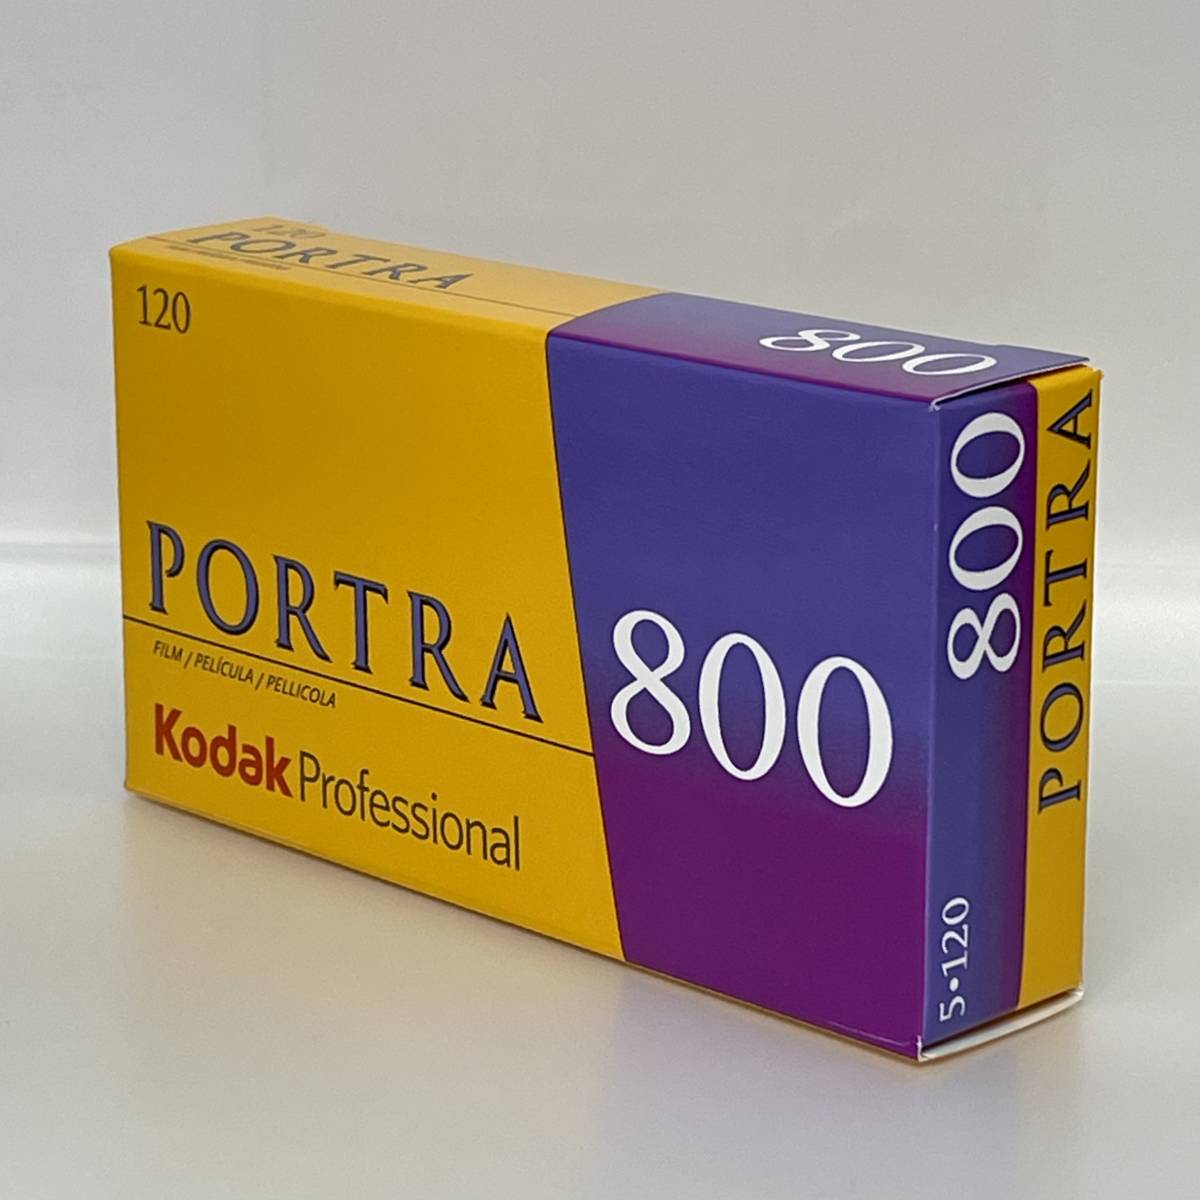 Kodak PORTRA 800 120-5本パック期限2024年4月 - neolardecor.com.br